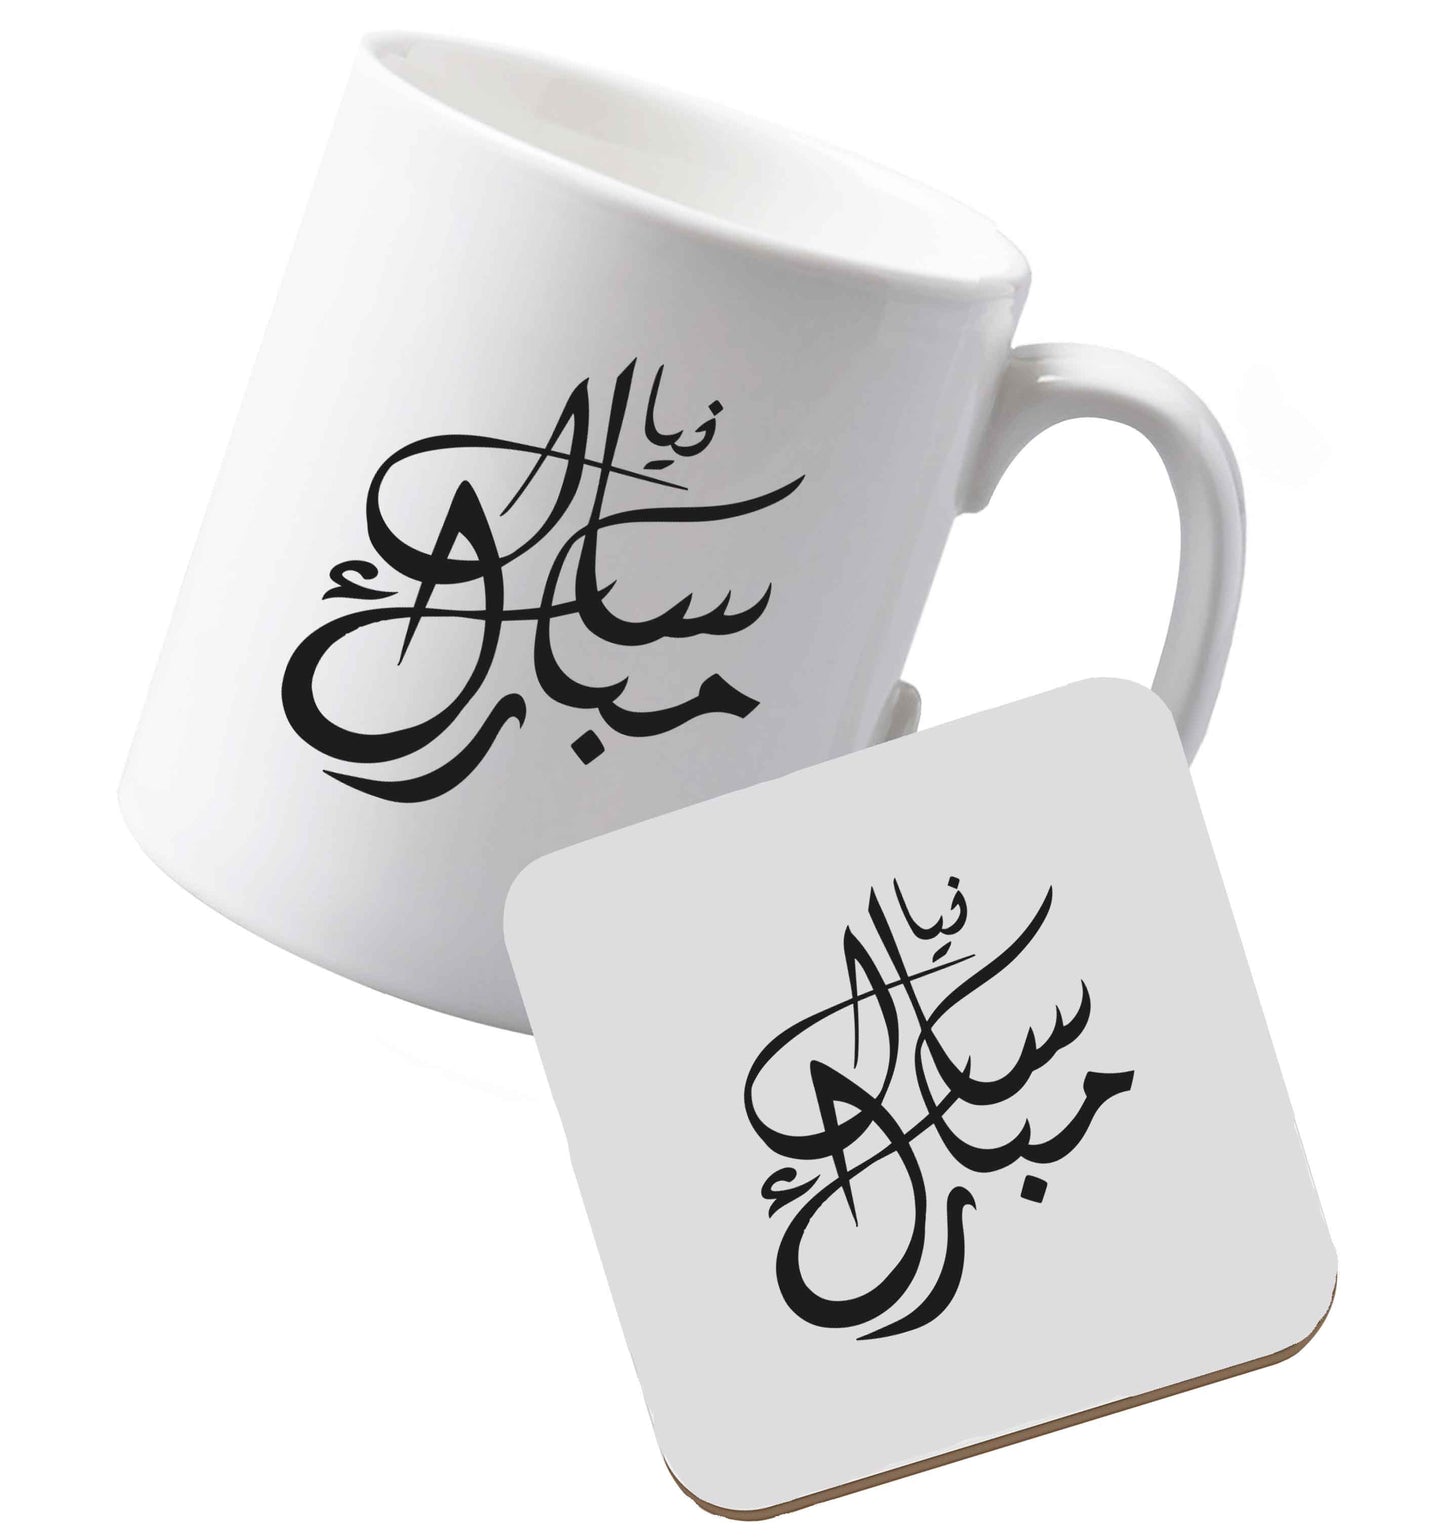 10 oz Ceramic mug and coaster Urdu Naya saal mubarak both sides